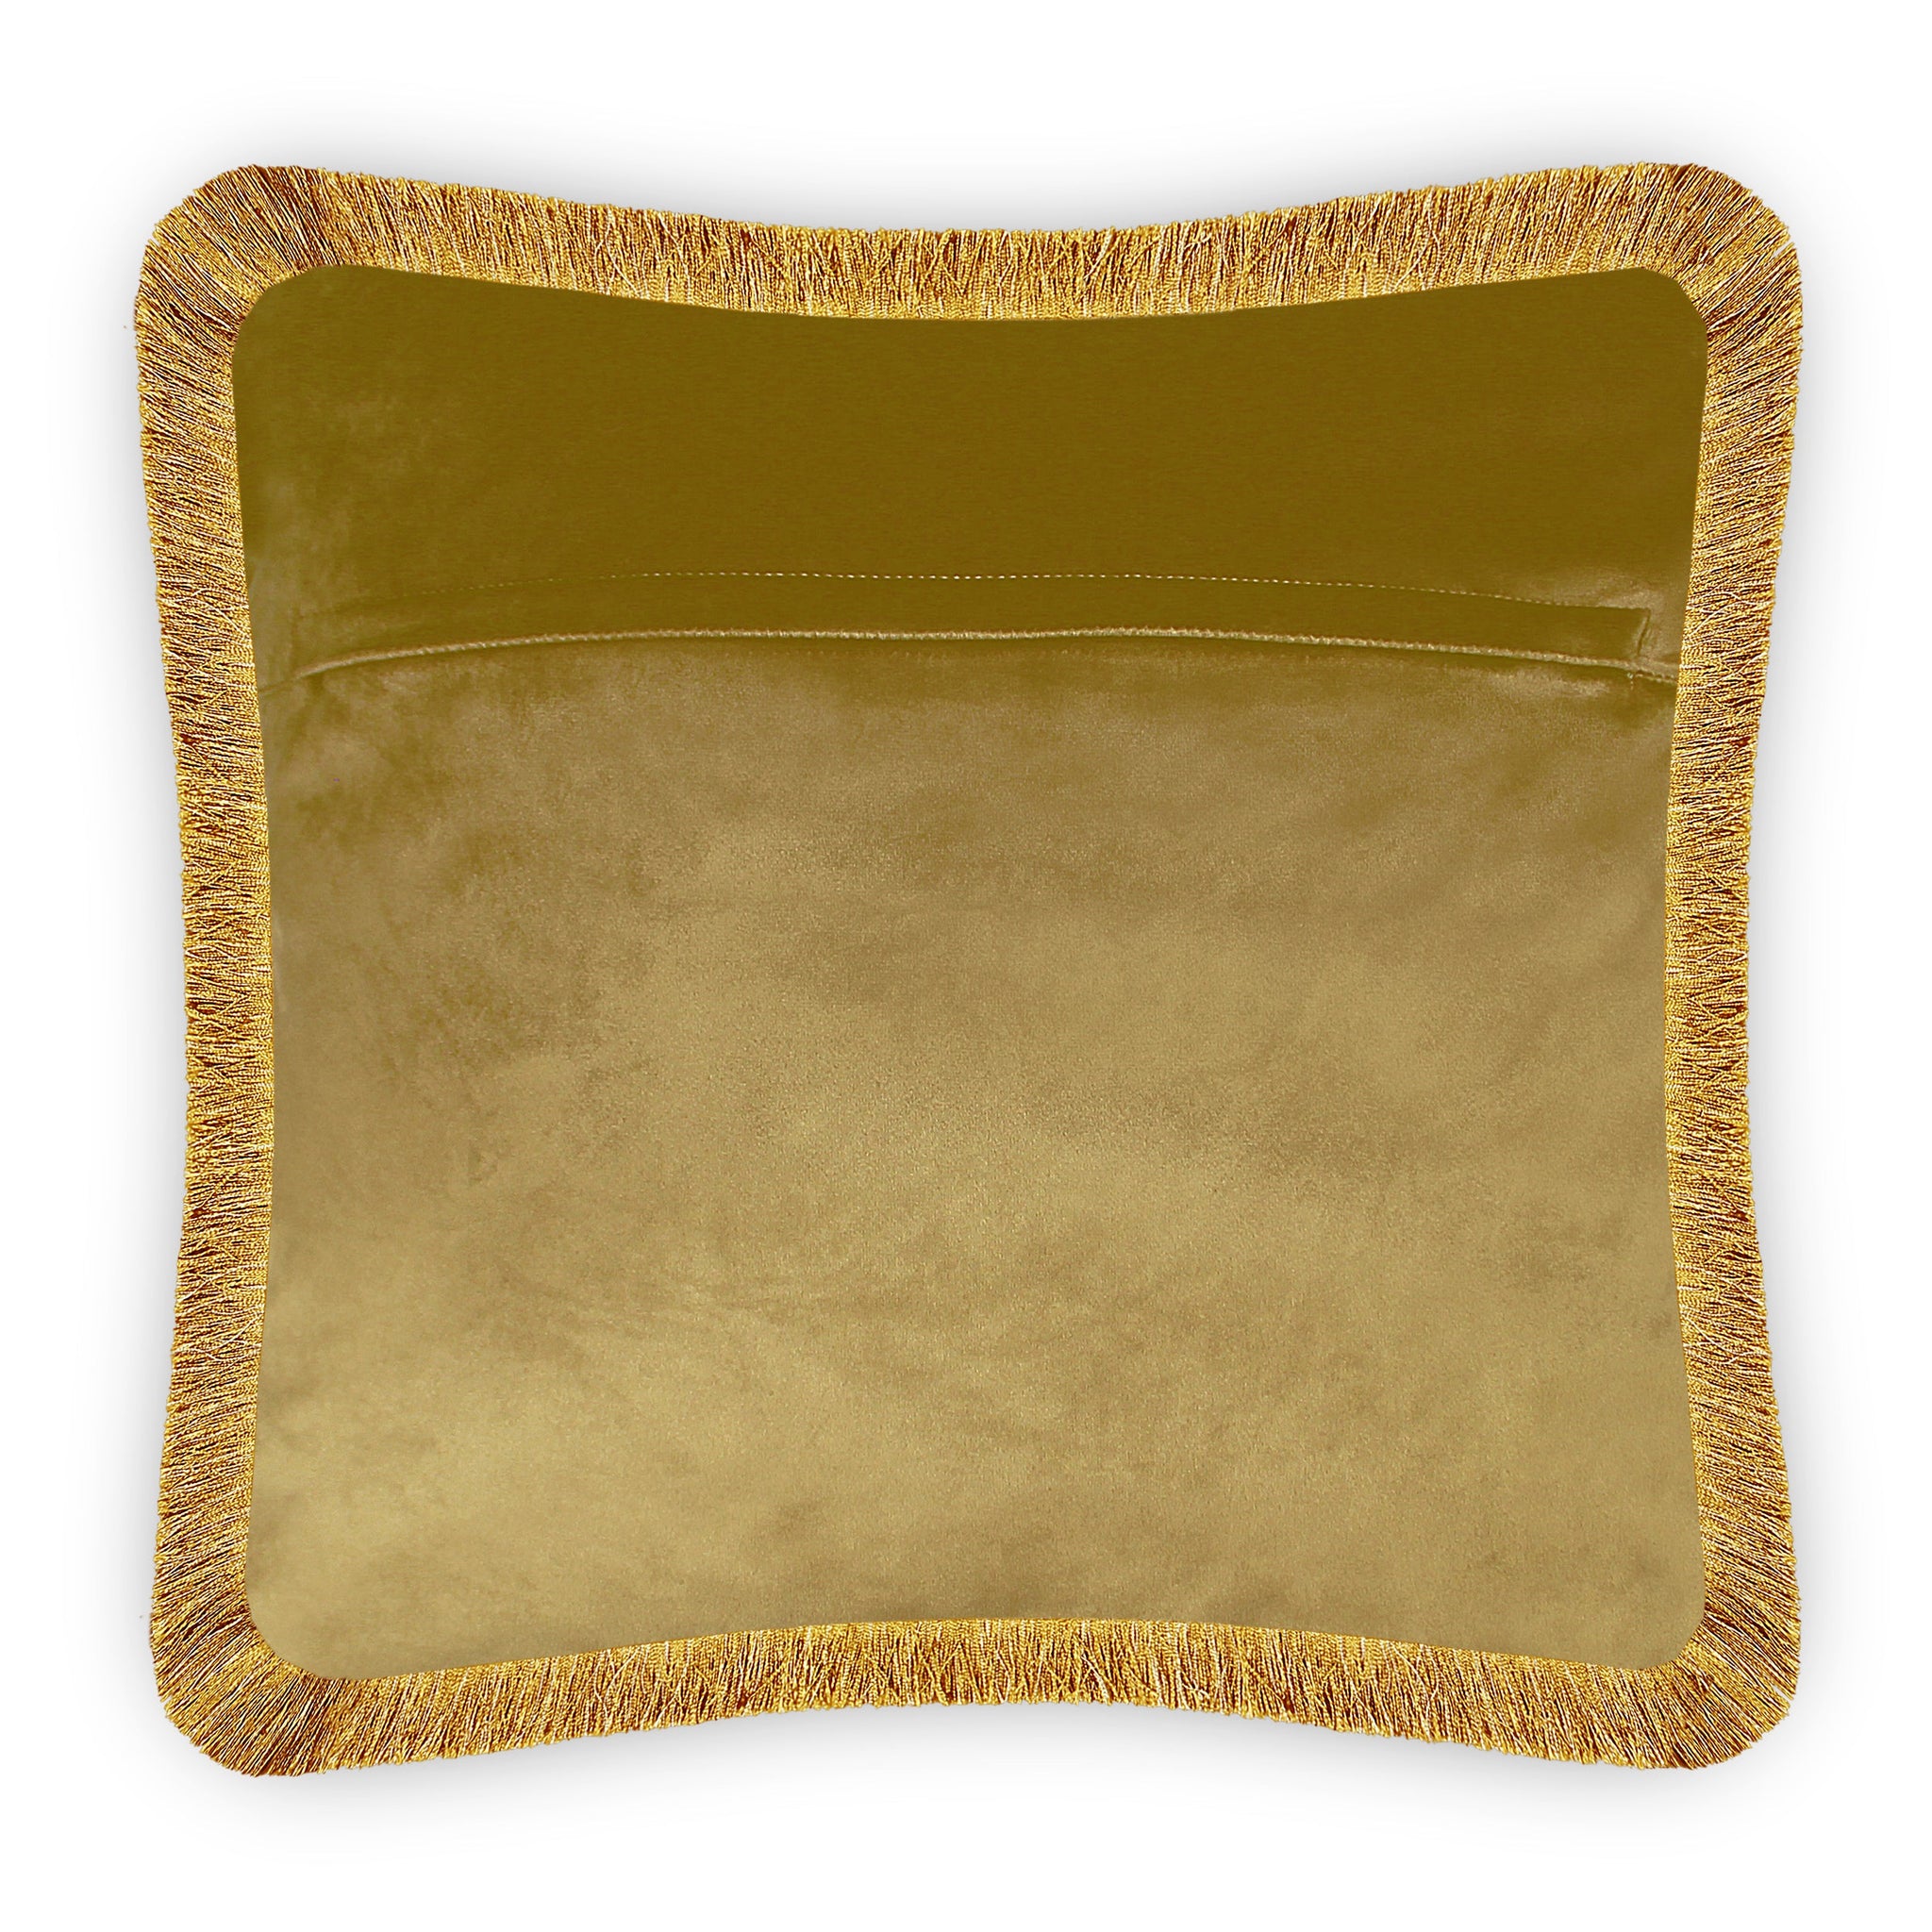 Vellato European Cushion Cover, Velvet Home Decorative Pillow Case, Embroidery Baroque Style Pillowcase 45x45 cm 18x18 Inch